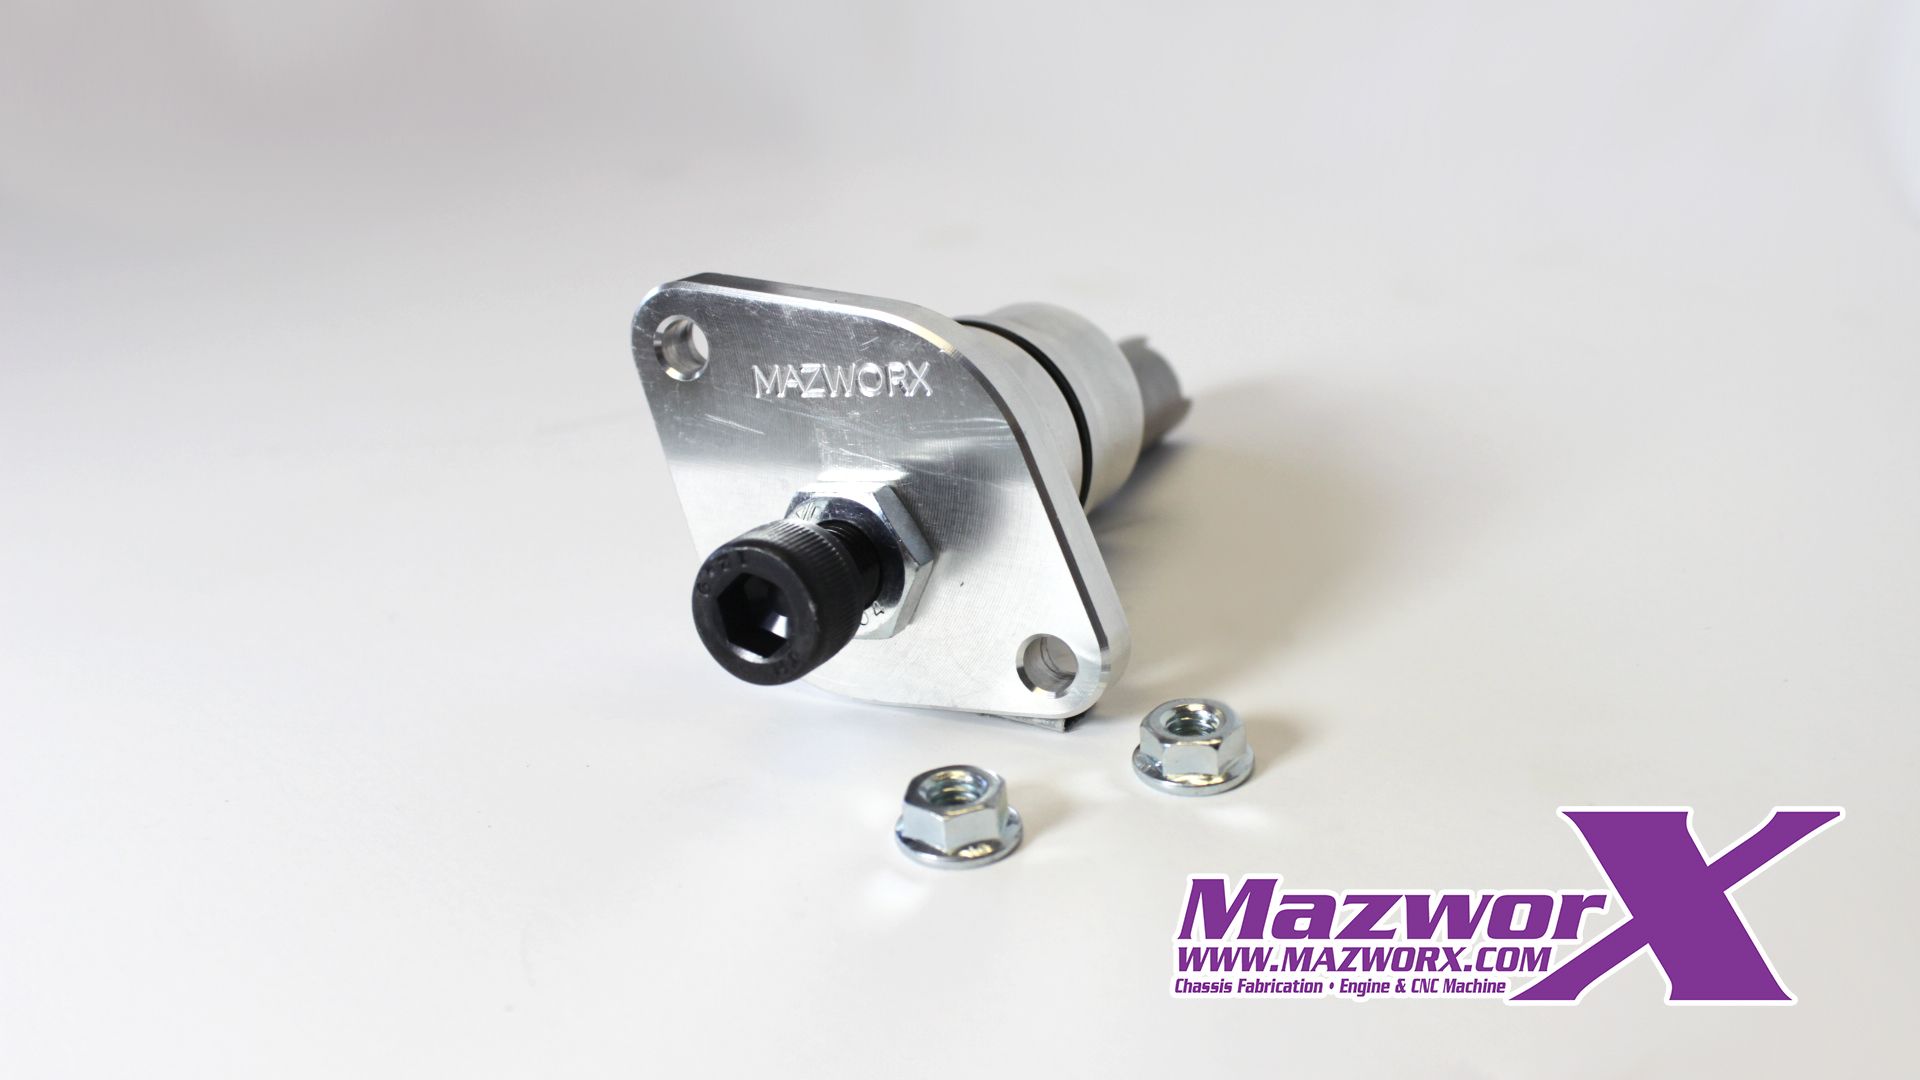 Mazworx Billet Timing Chain Tensioner - Nissan SR20